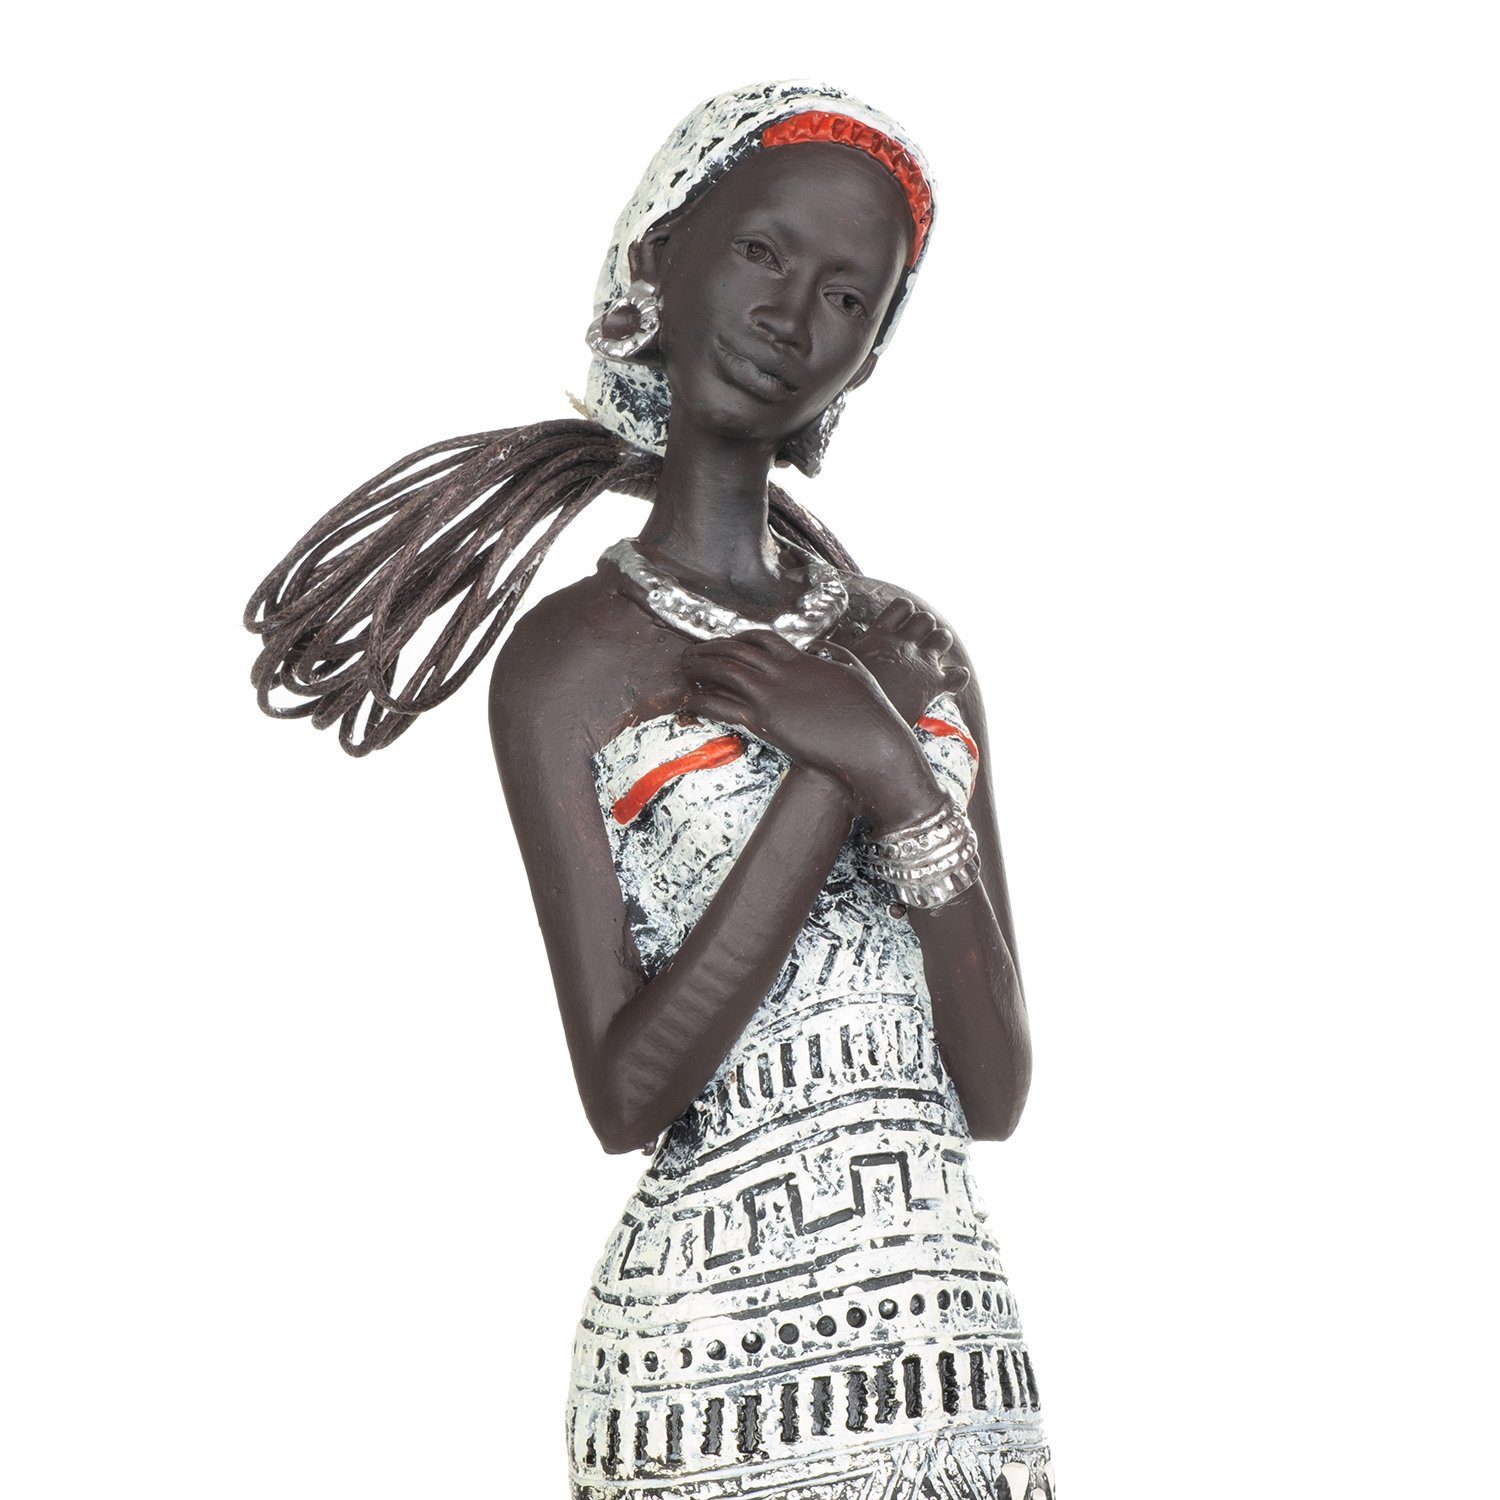 Moritz Dekofigur Deko-Figur Polyresin Afrikanische weiß Figuren aus Kunstfigur Polyresin, Dekoelement Dekoration Frauen Dekofigur kulturell aus